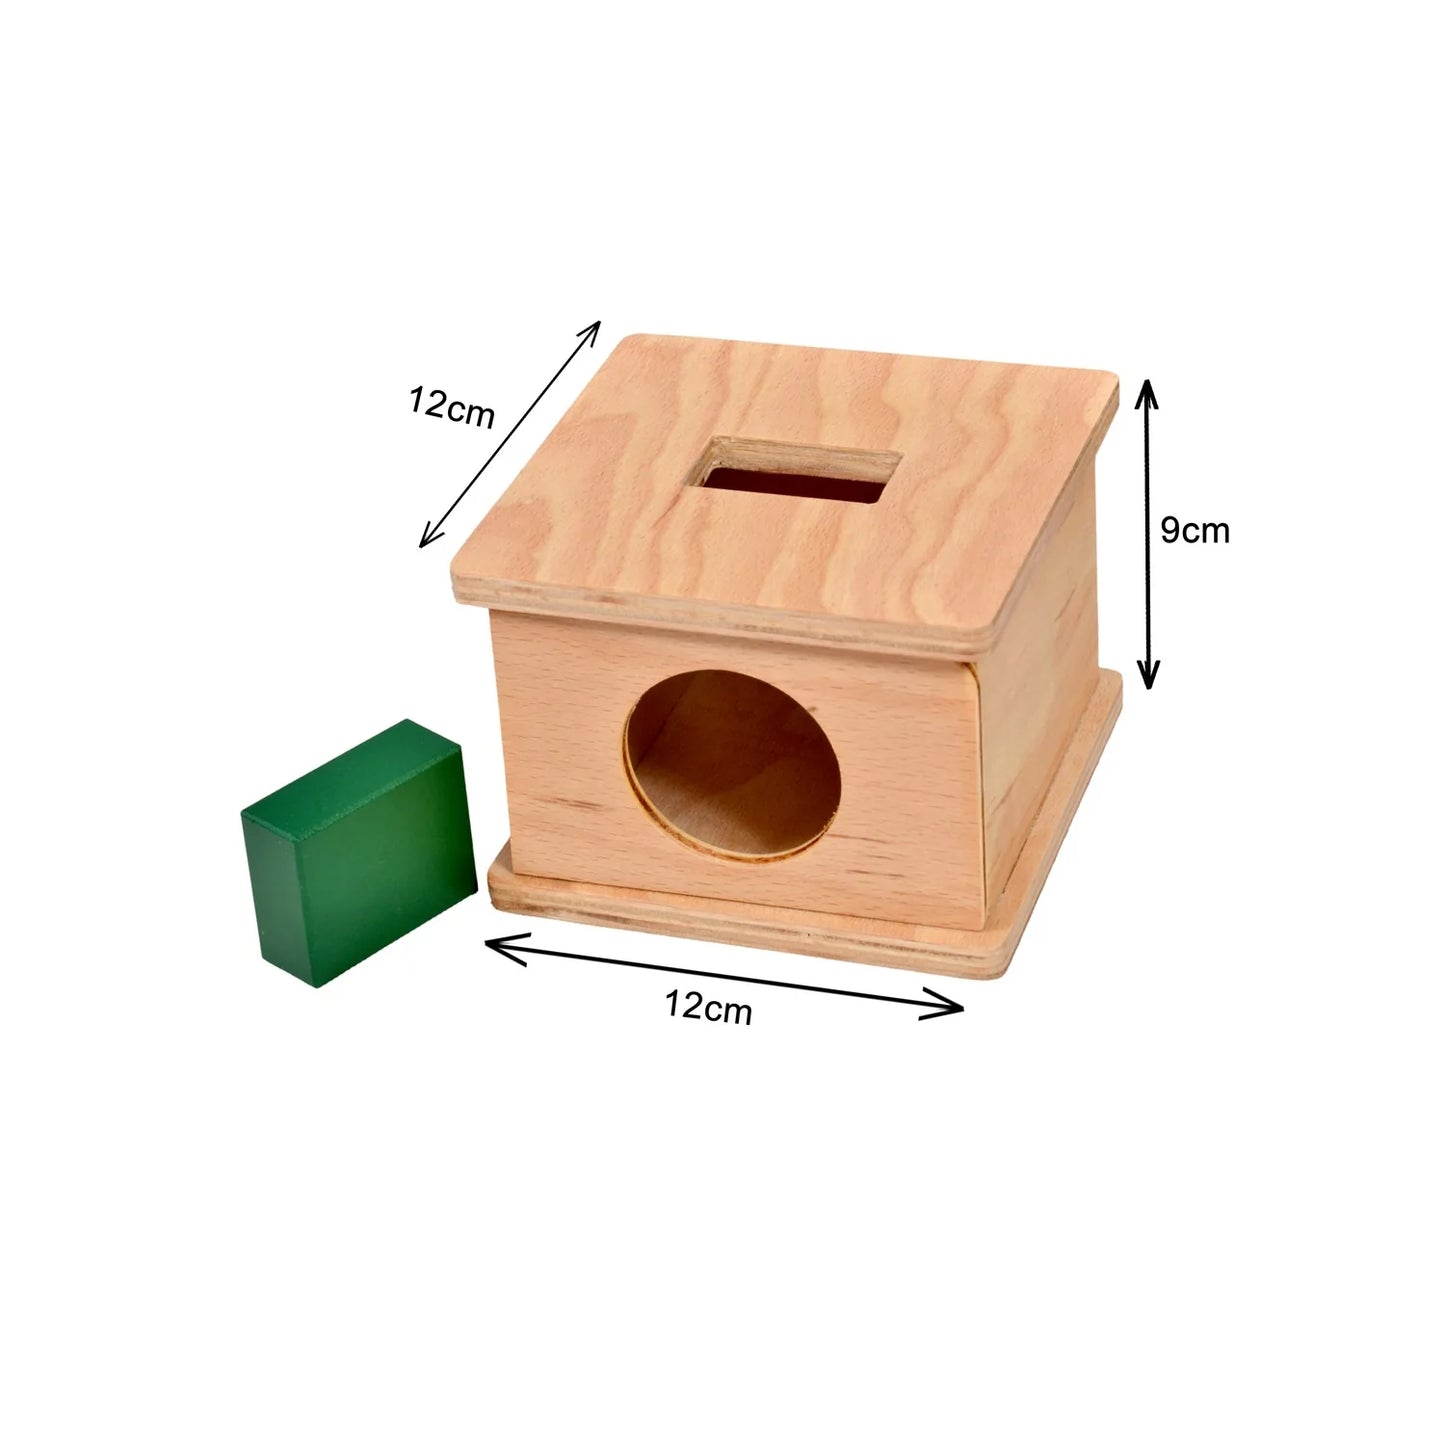 Montessori Imbucare Box With Rectangular Hole Wooden Toy